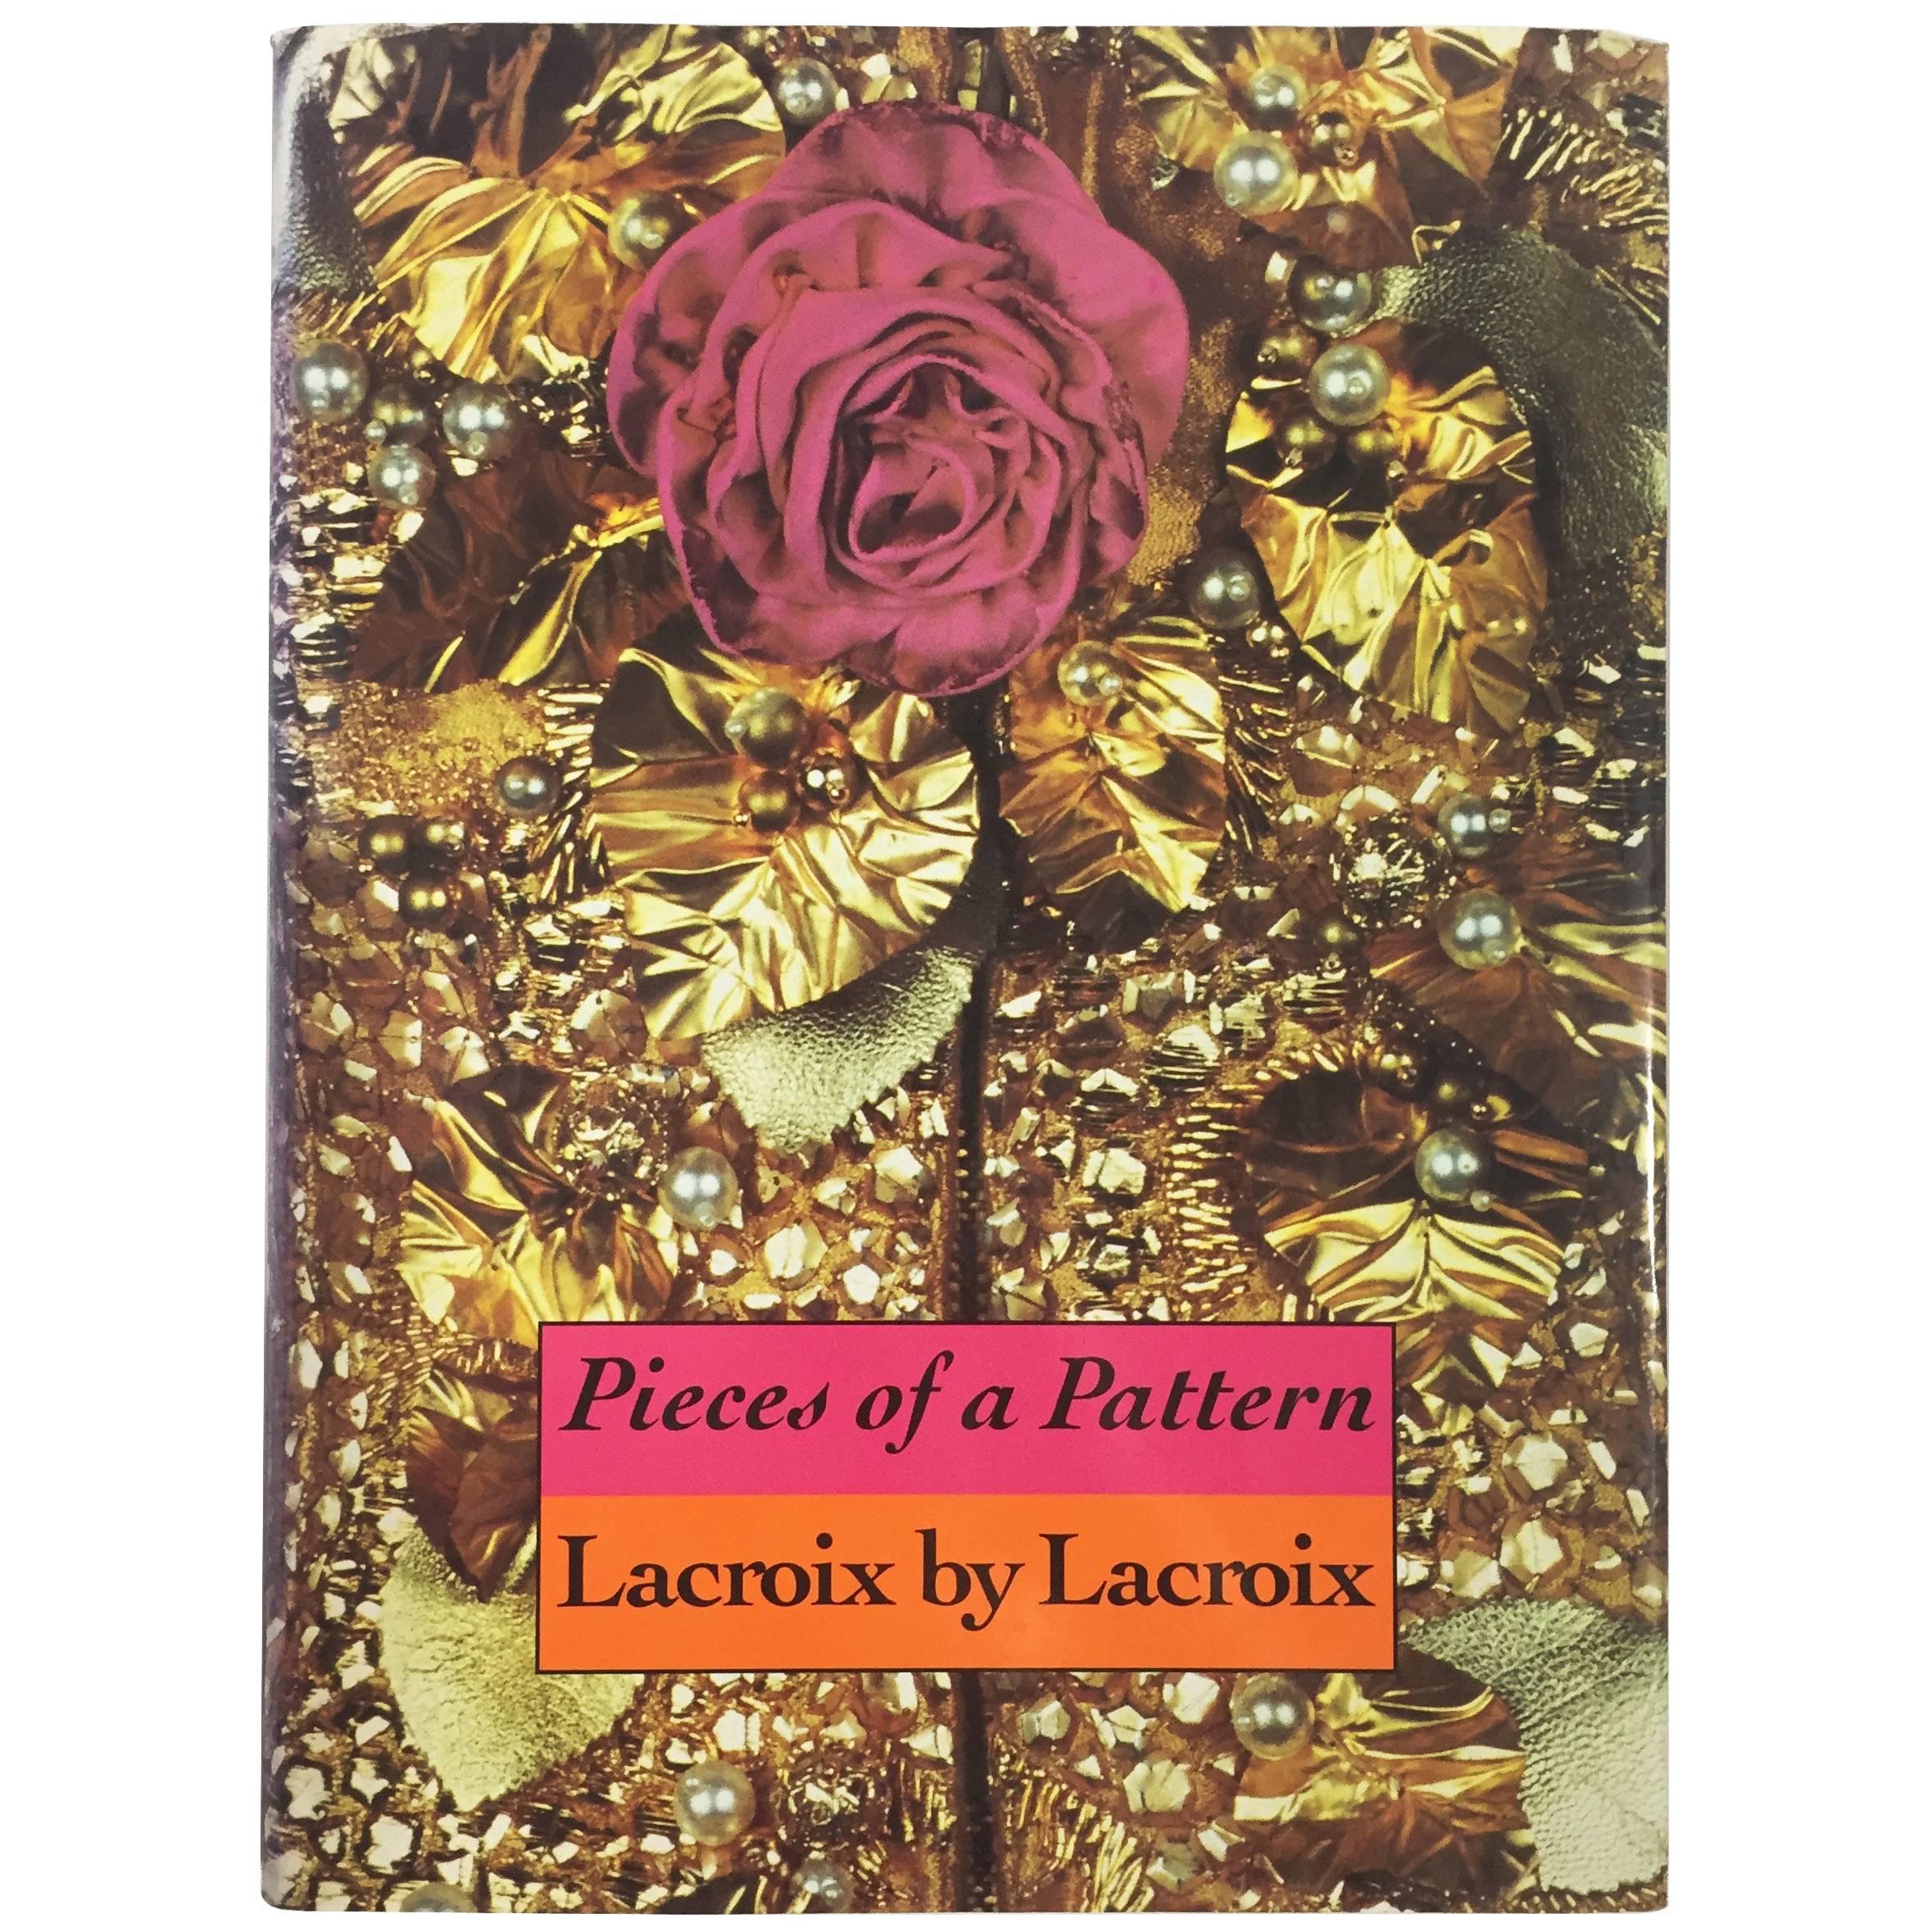 Lacroix by Lacroix, 'Pieces of a Pattern' Signed - 1992